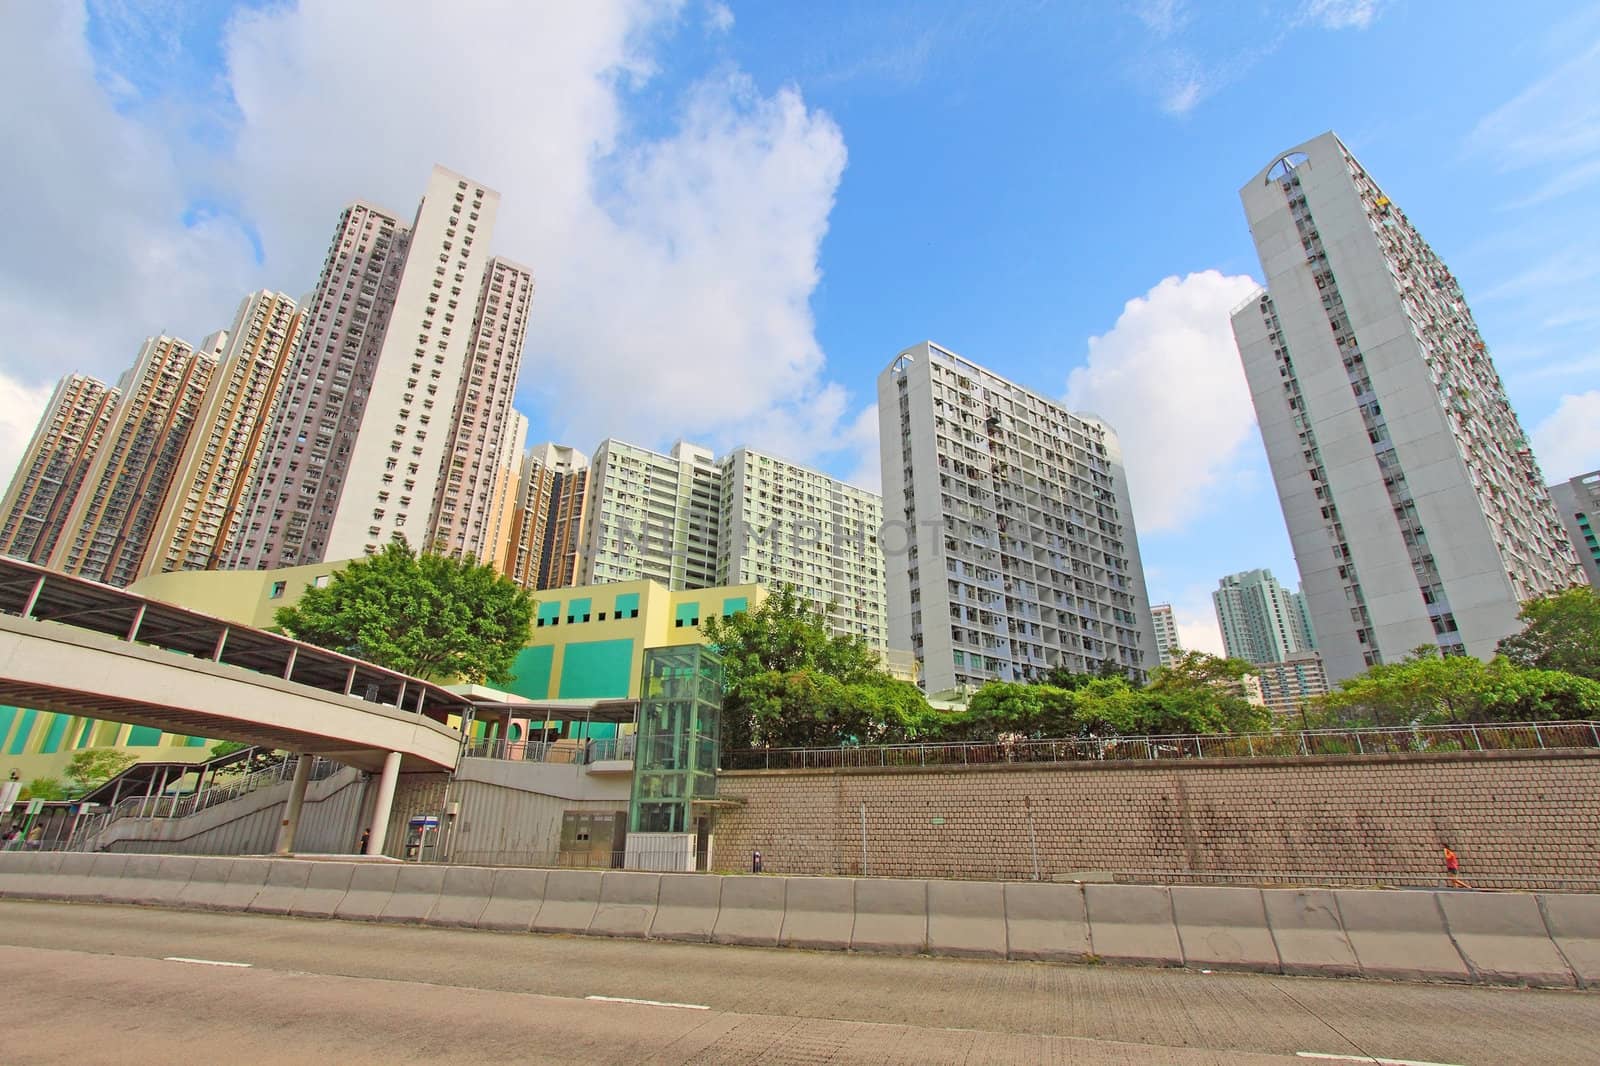 Hong Kong downtown and public housing